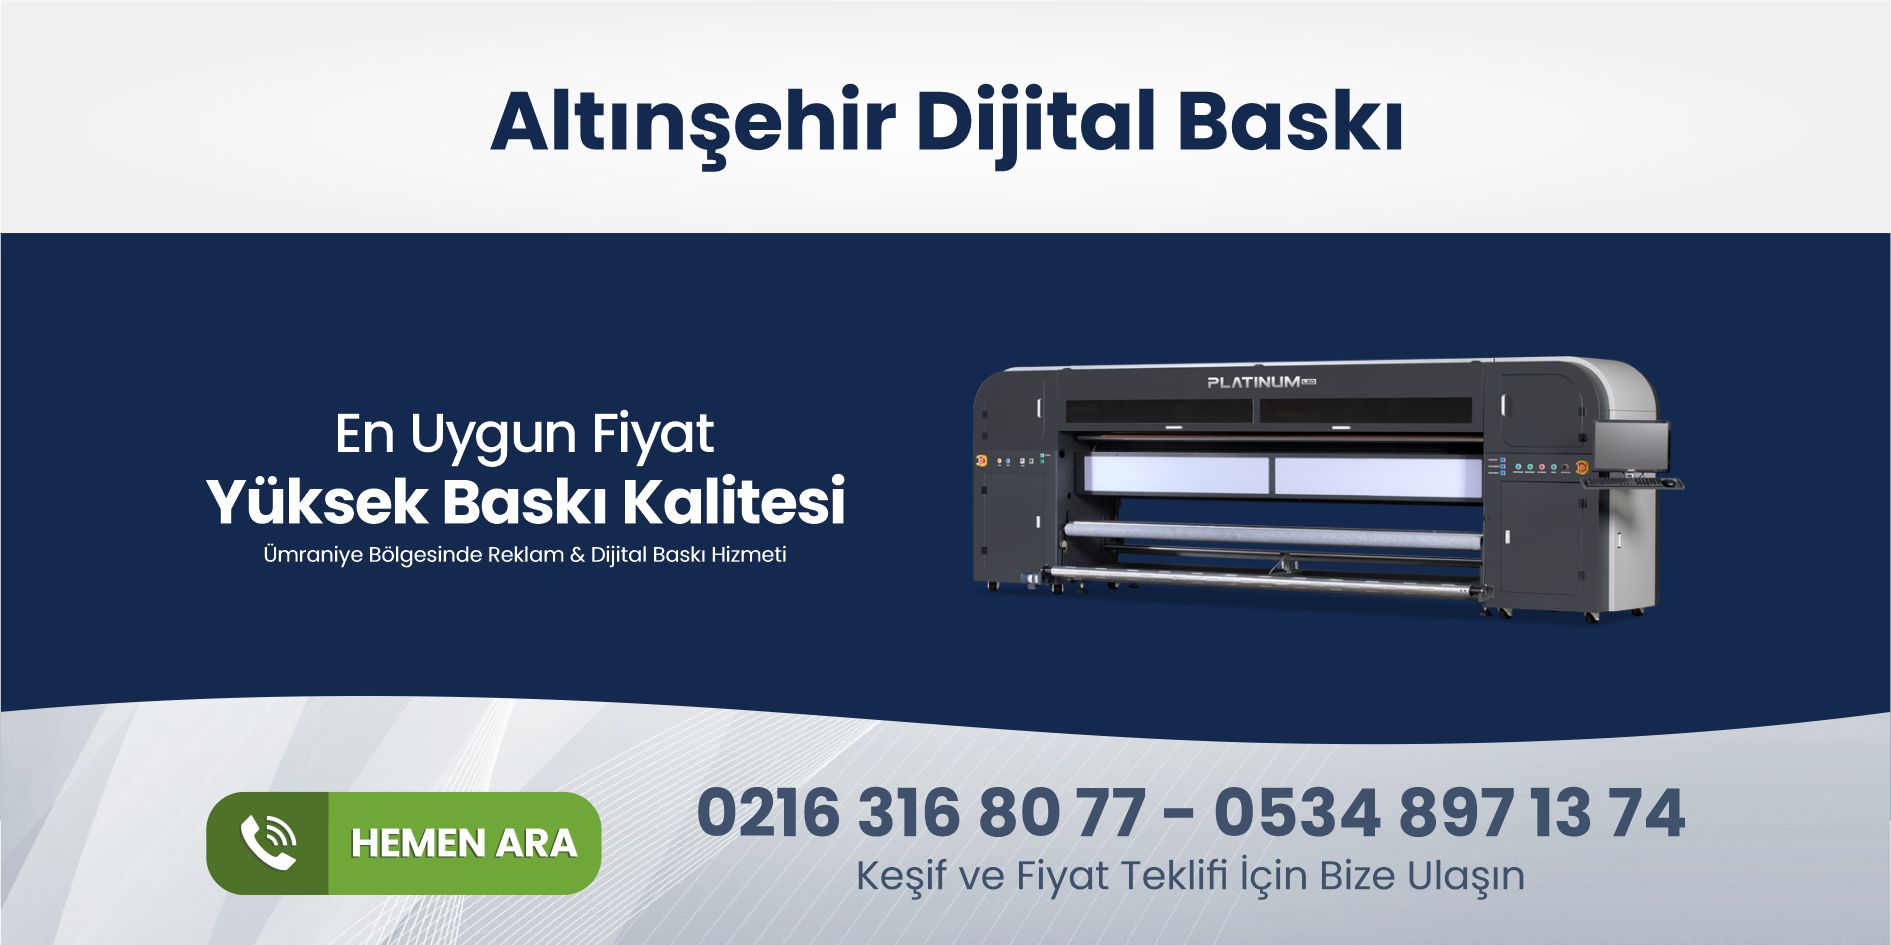 You are currently viewing Altınşehir Dijital Baskı